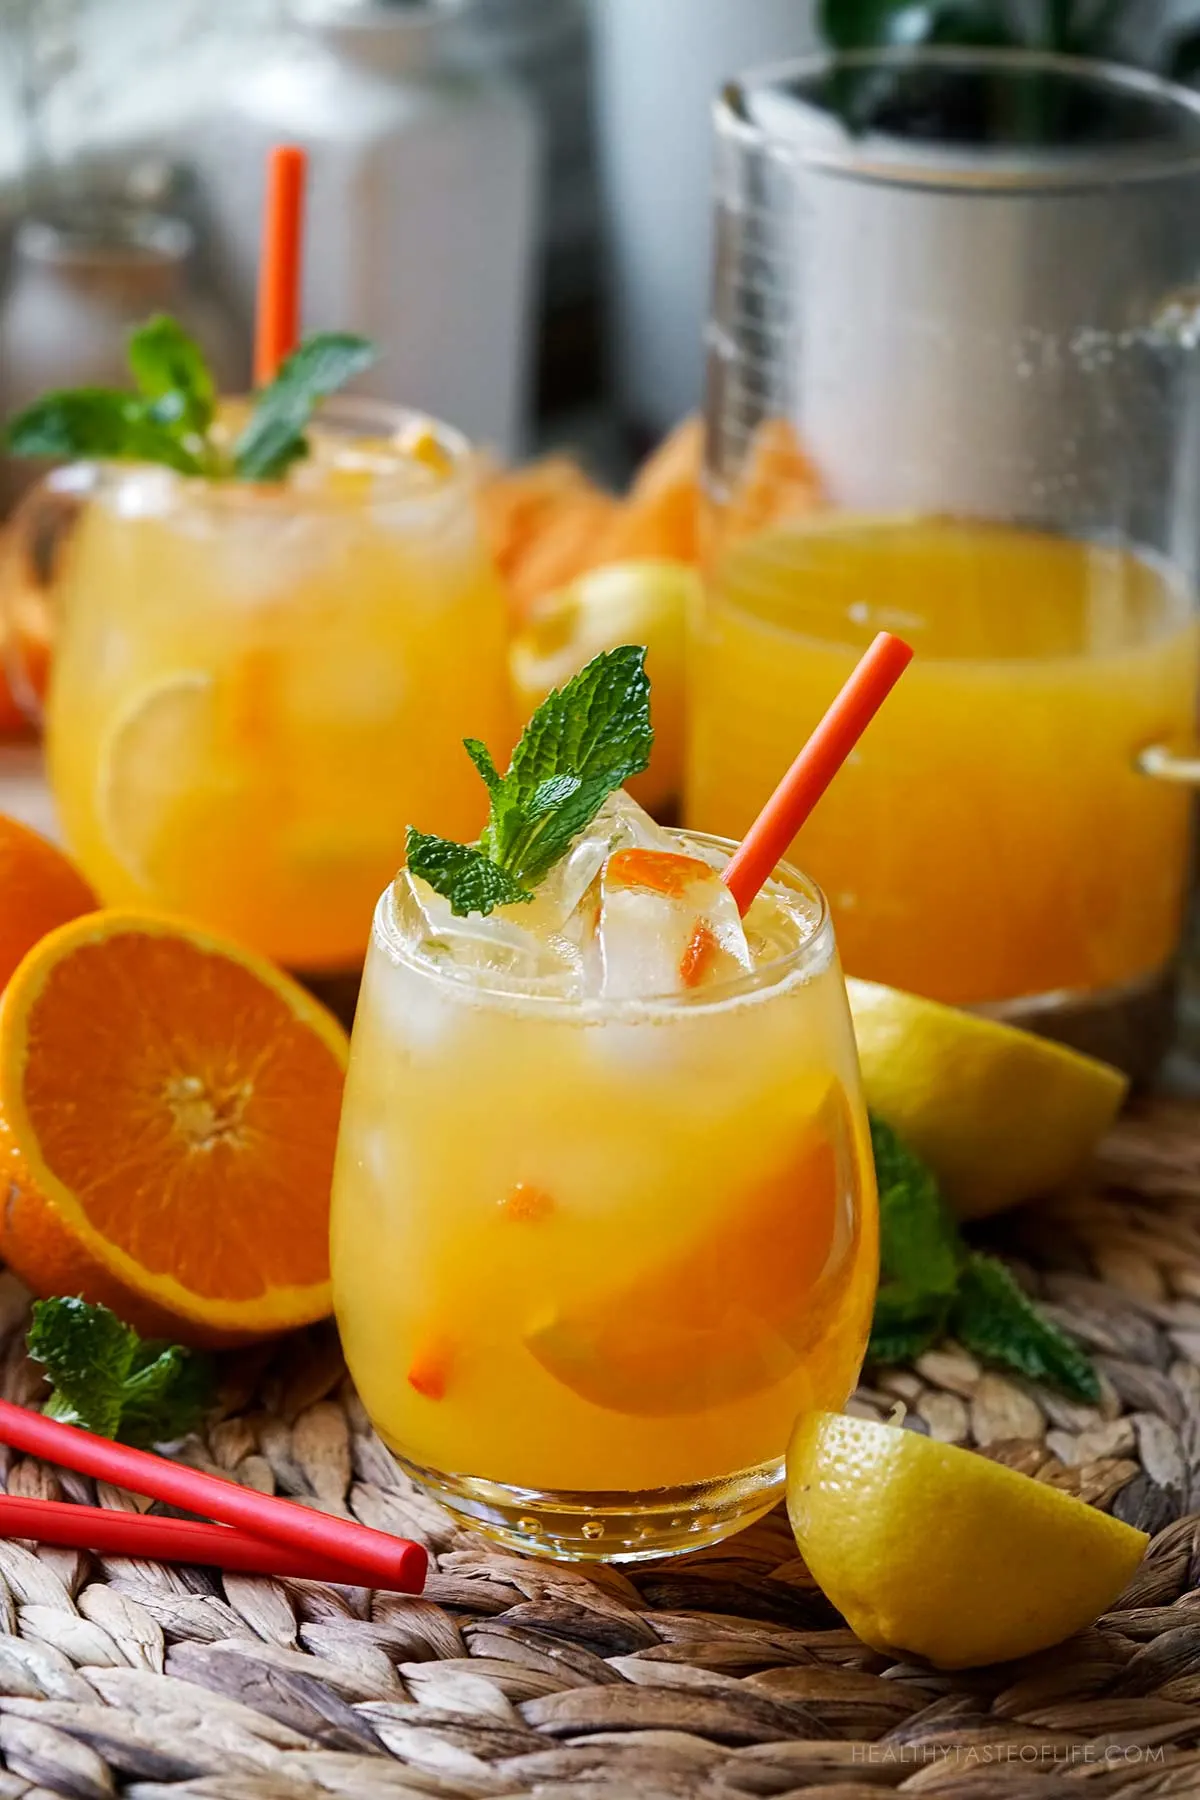 Orange lemonade aka orangeade served in glasses over ice and garnished with a slice of oarnge and lemon.